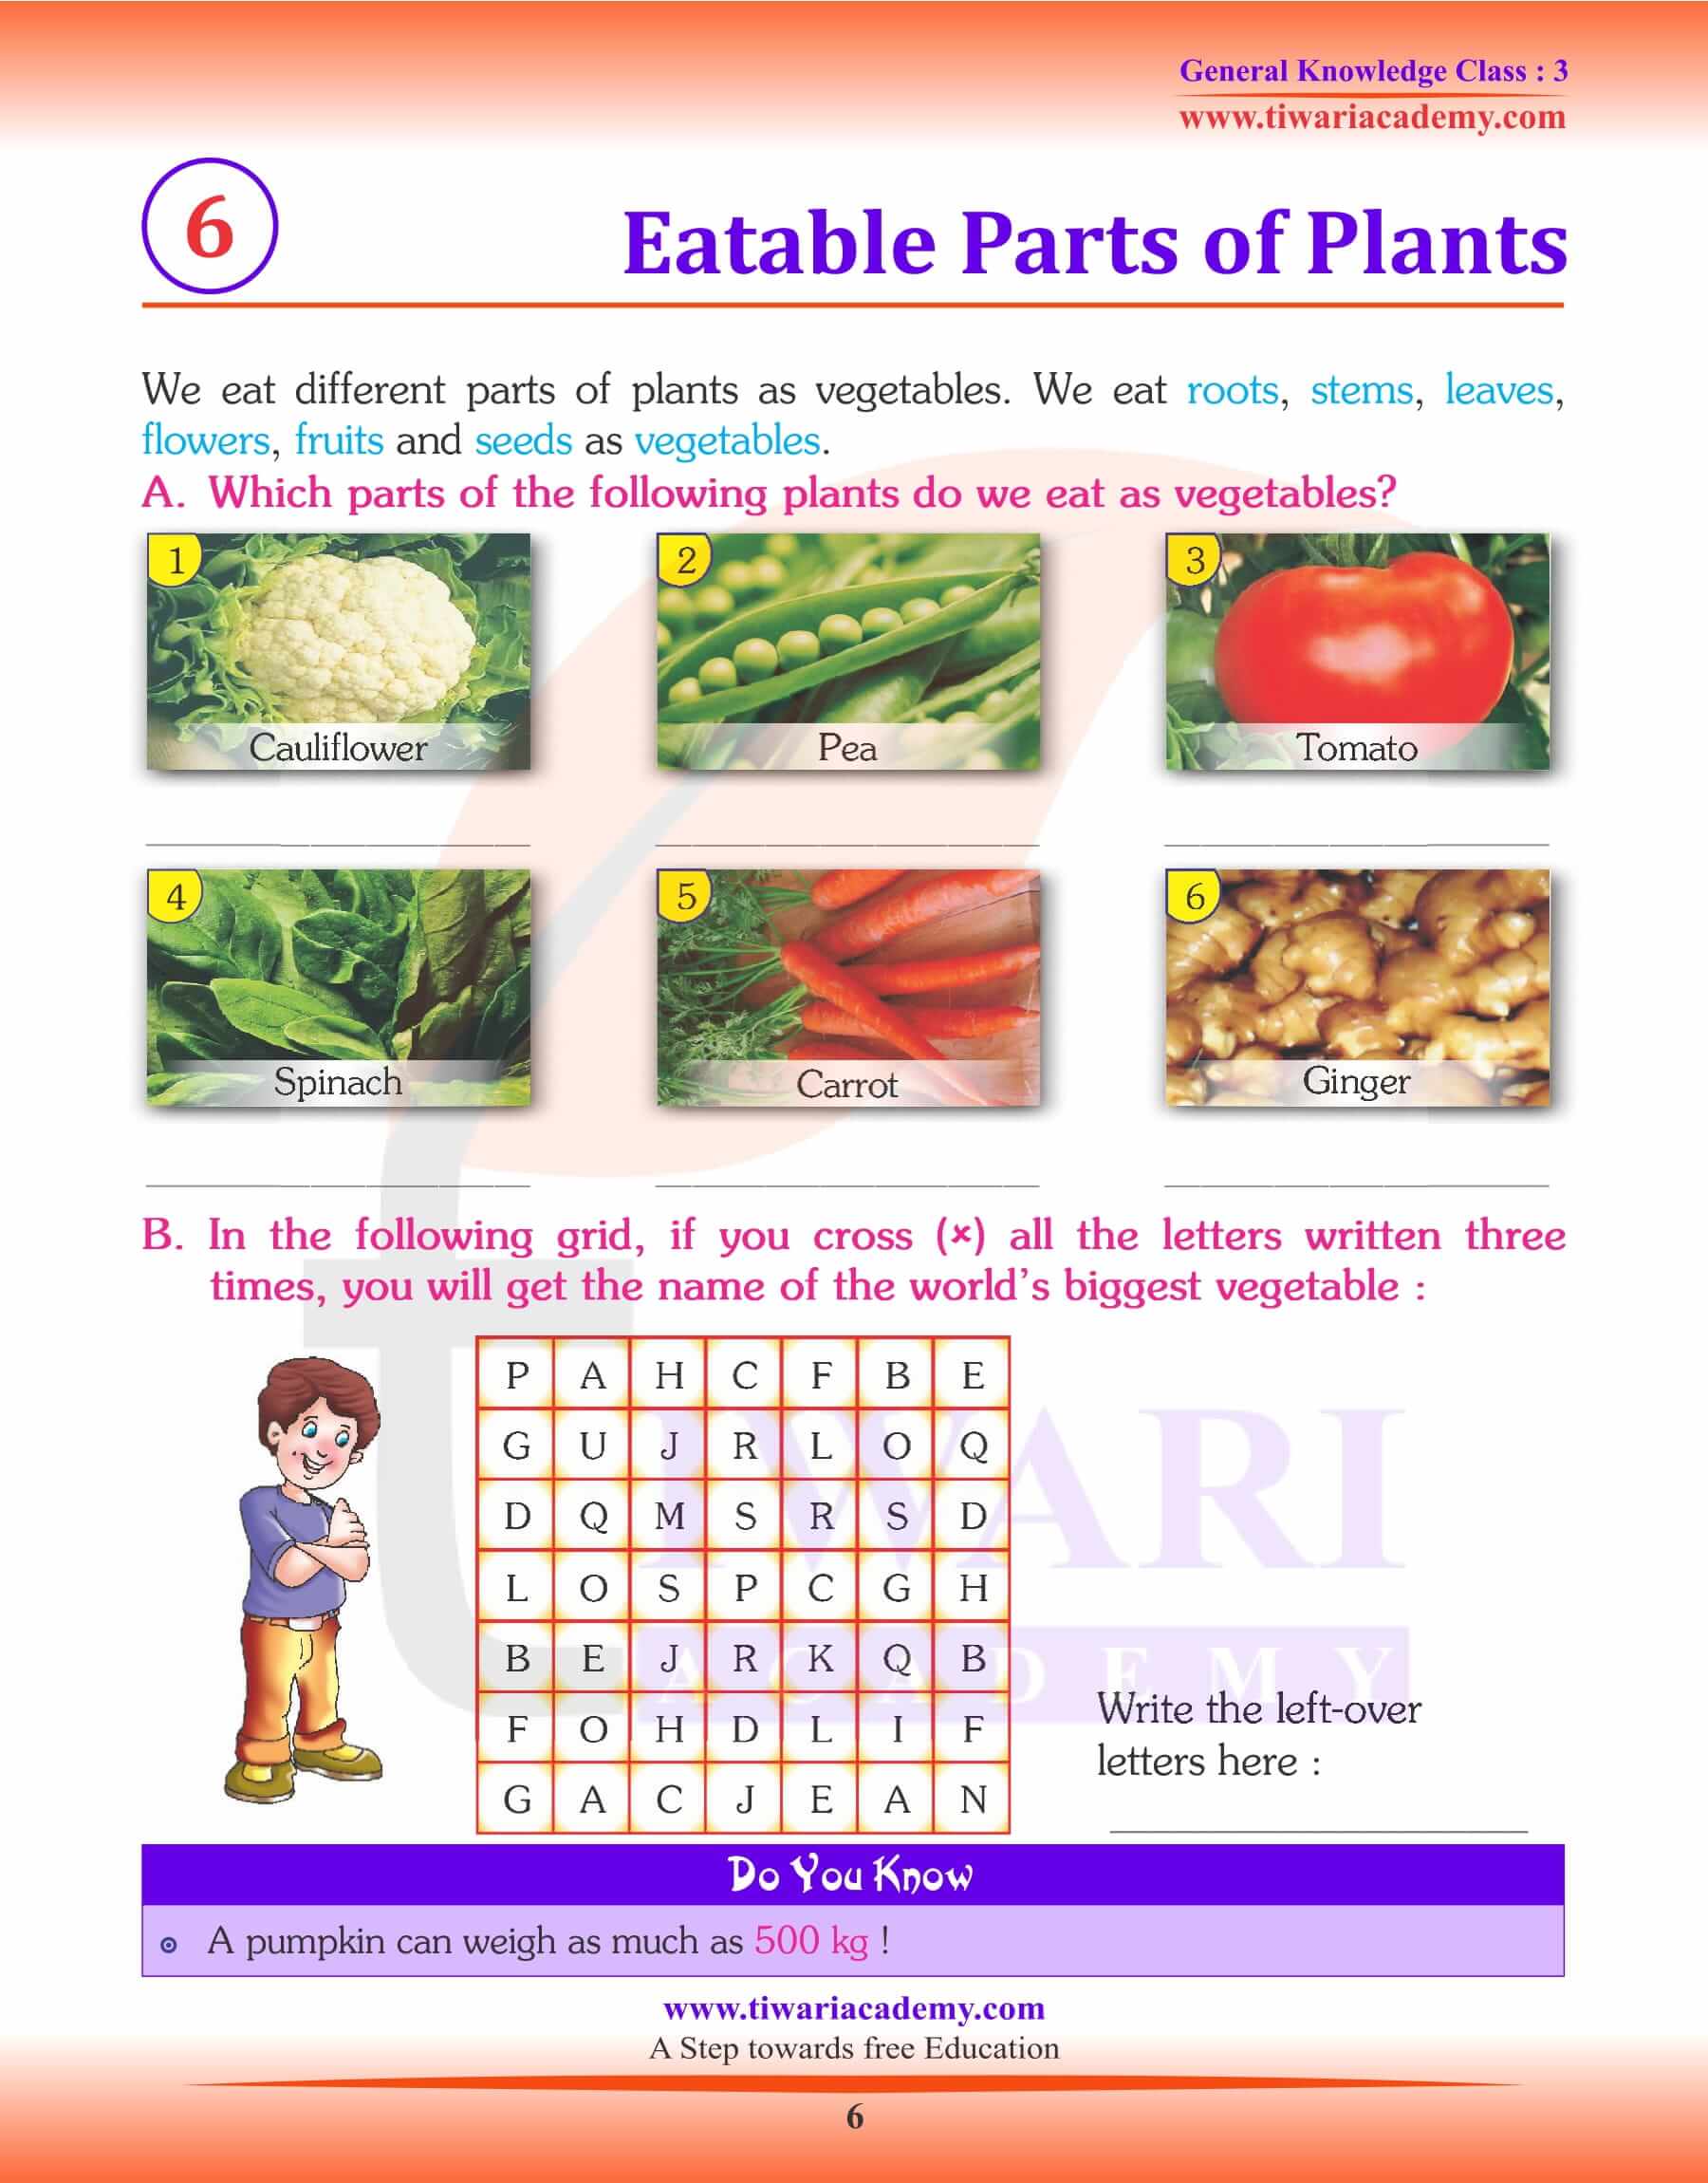 Eatable Parts of Plants